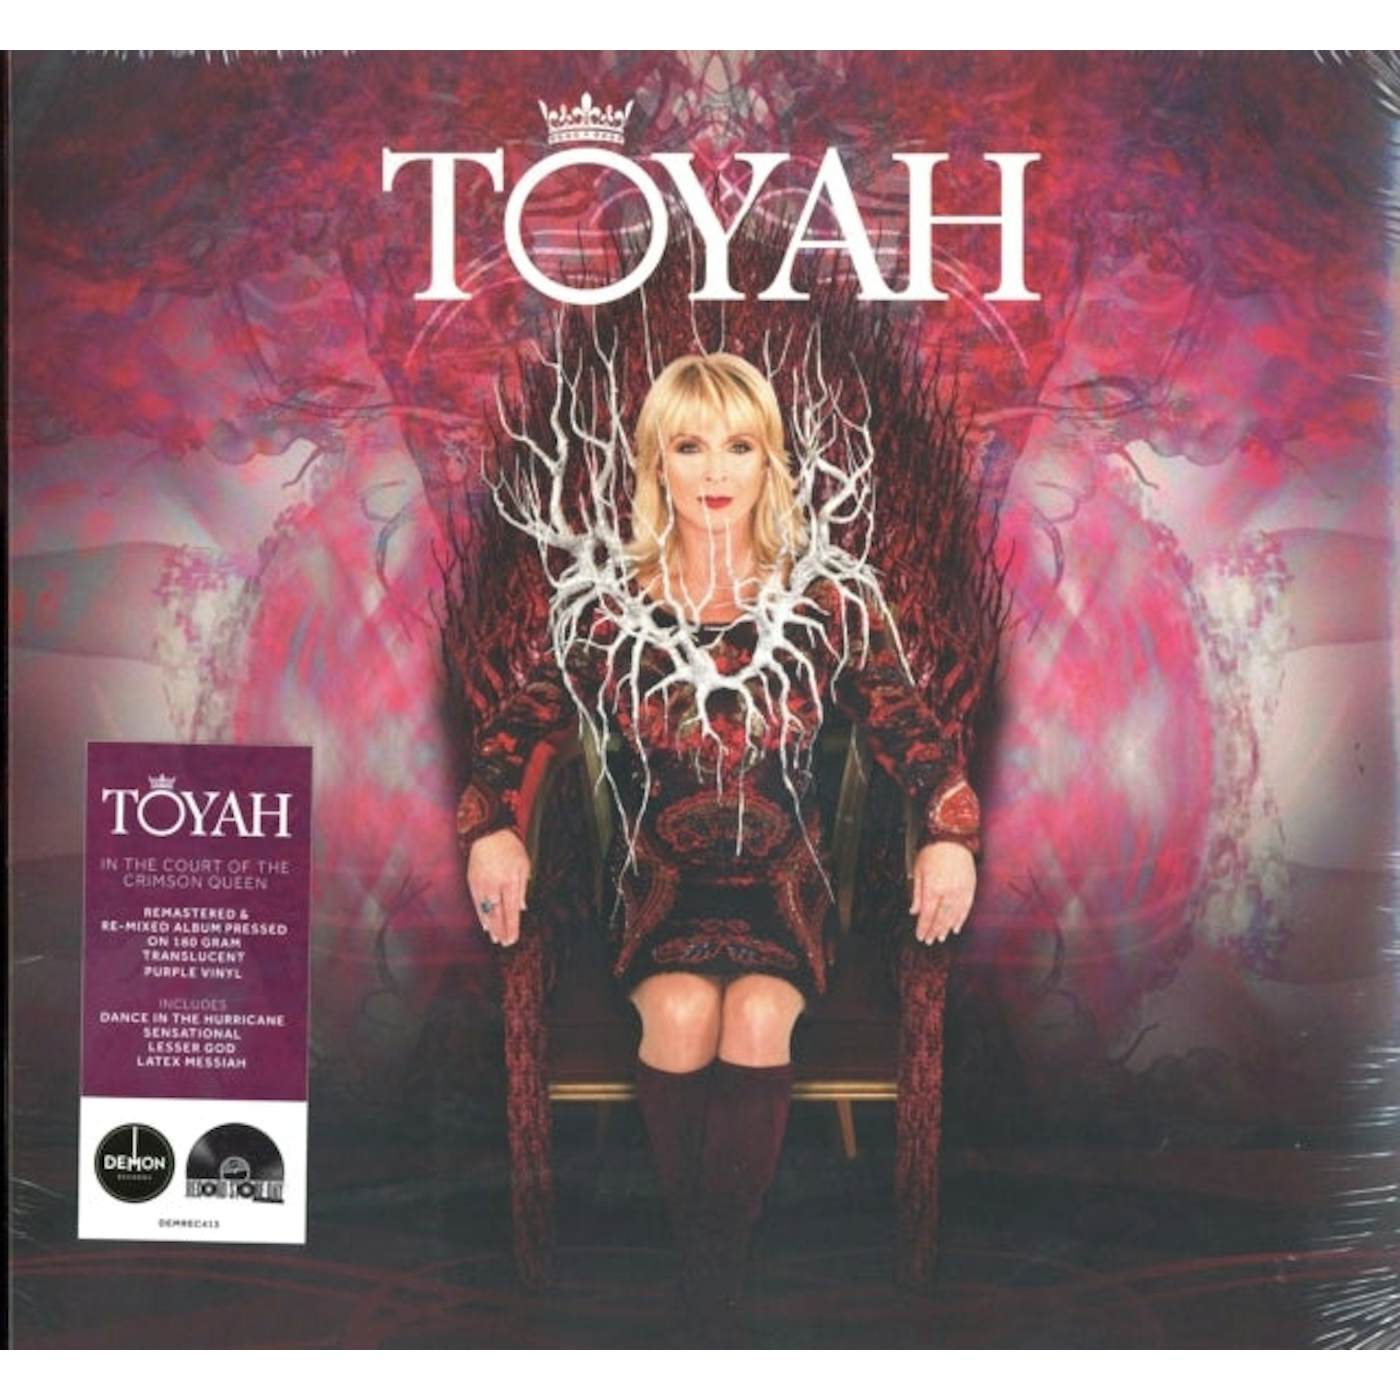 Toyah LP Vinyl Record - In The Court of the Crimson Queen (RSD 20. 19 )